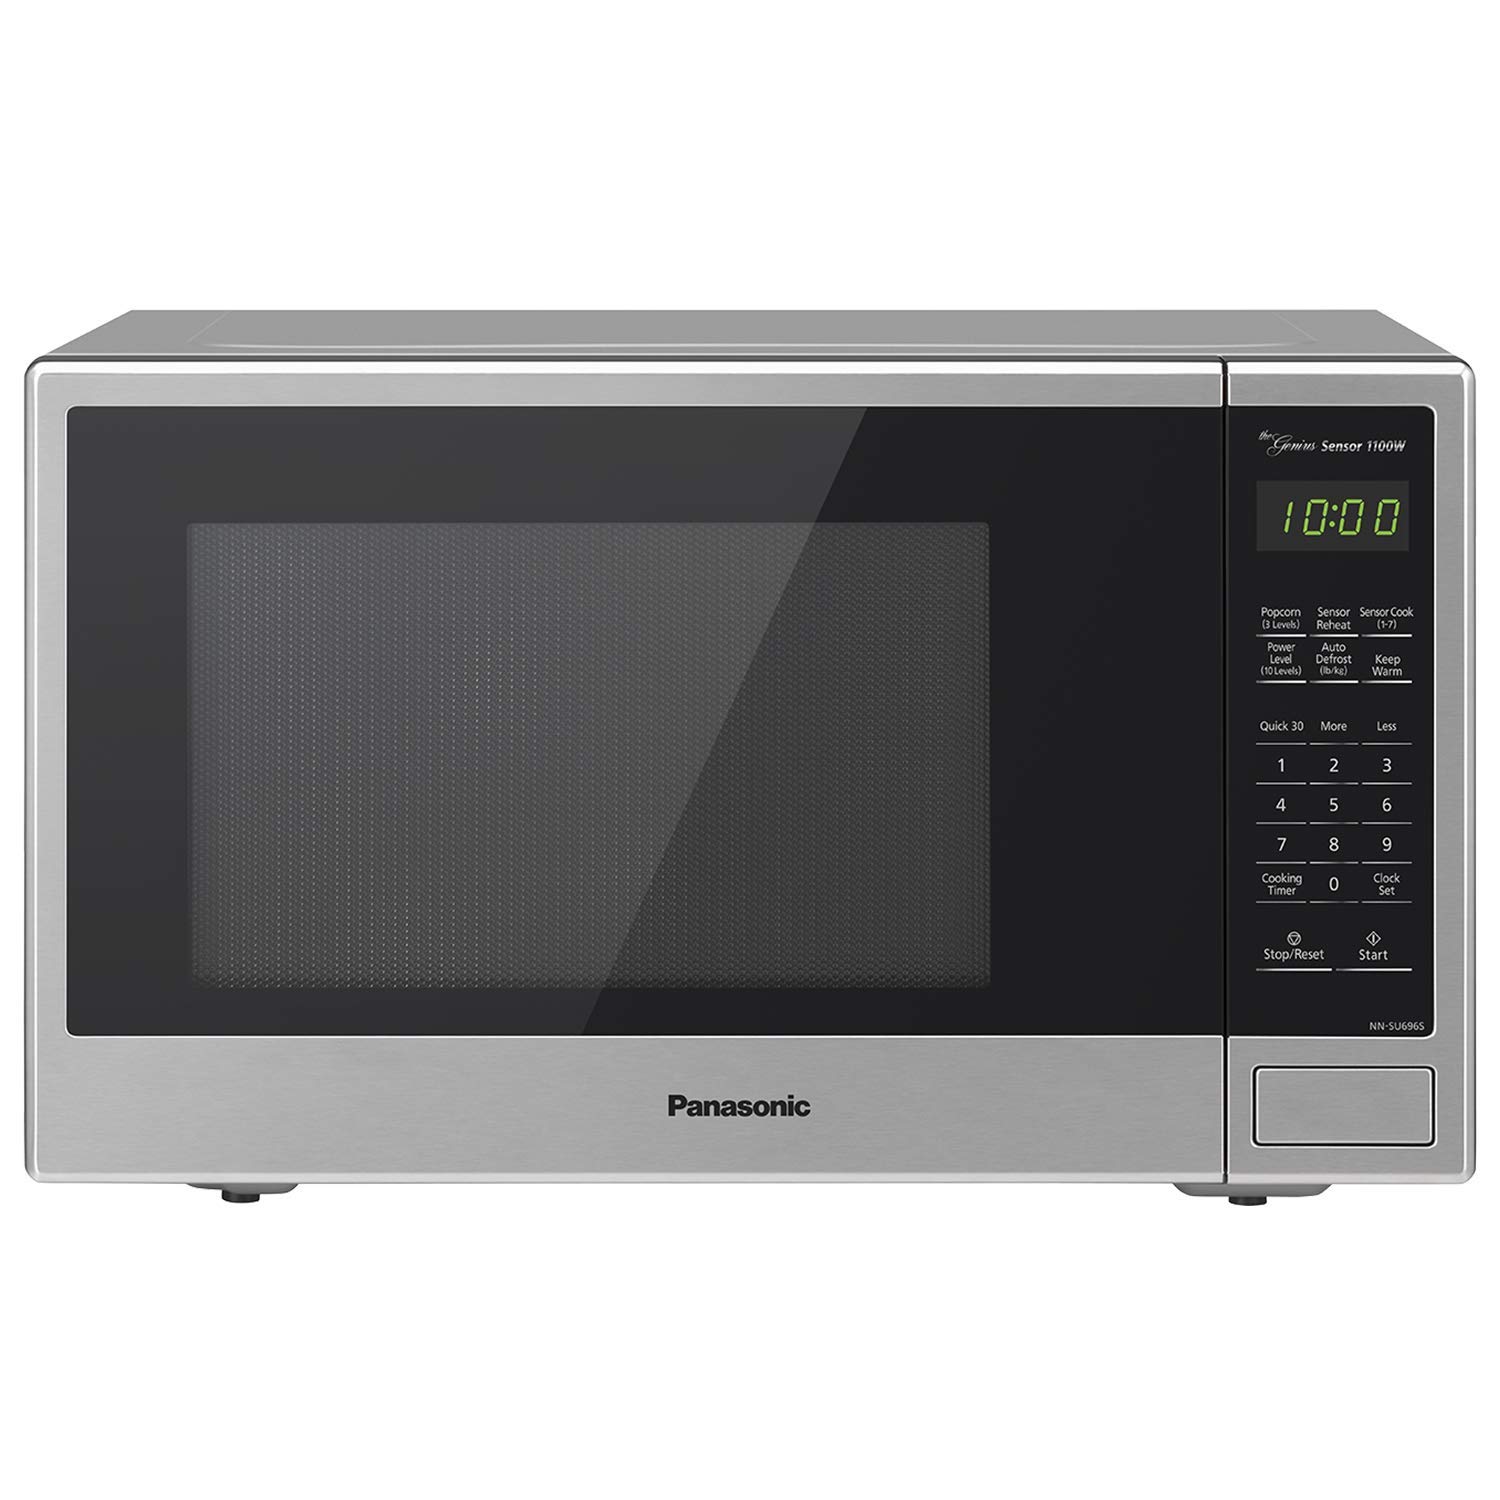 Panasonic NN-SU696S 1100W Countertop Inverter Technology Microwave Oven